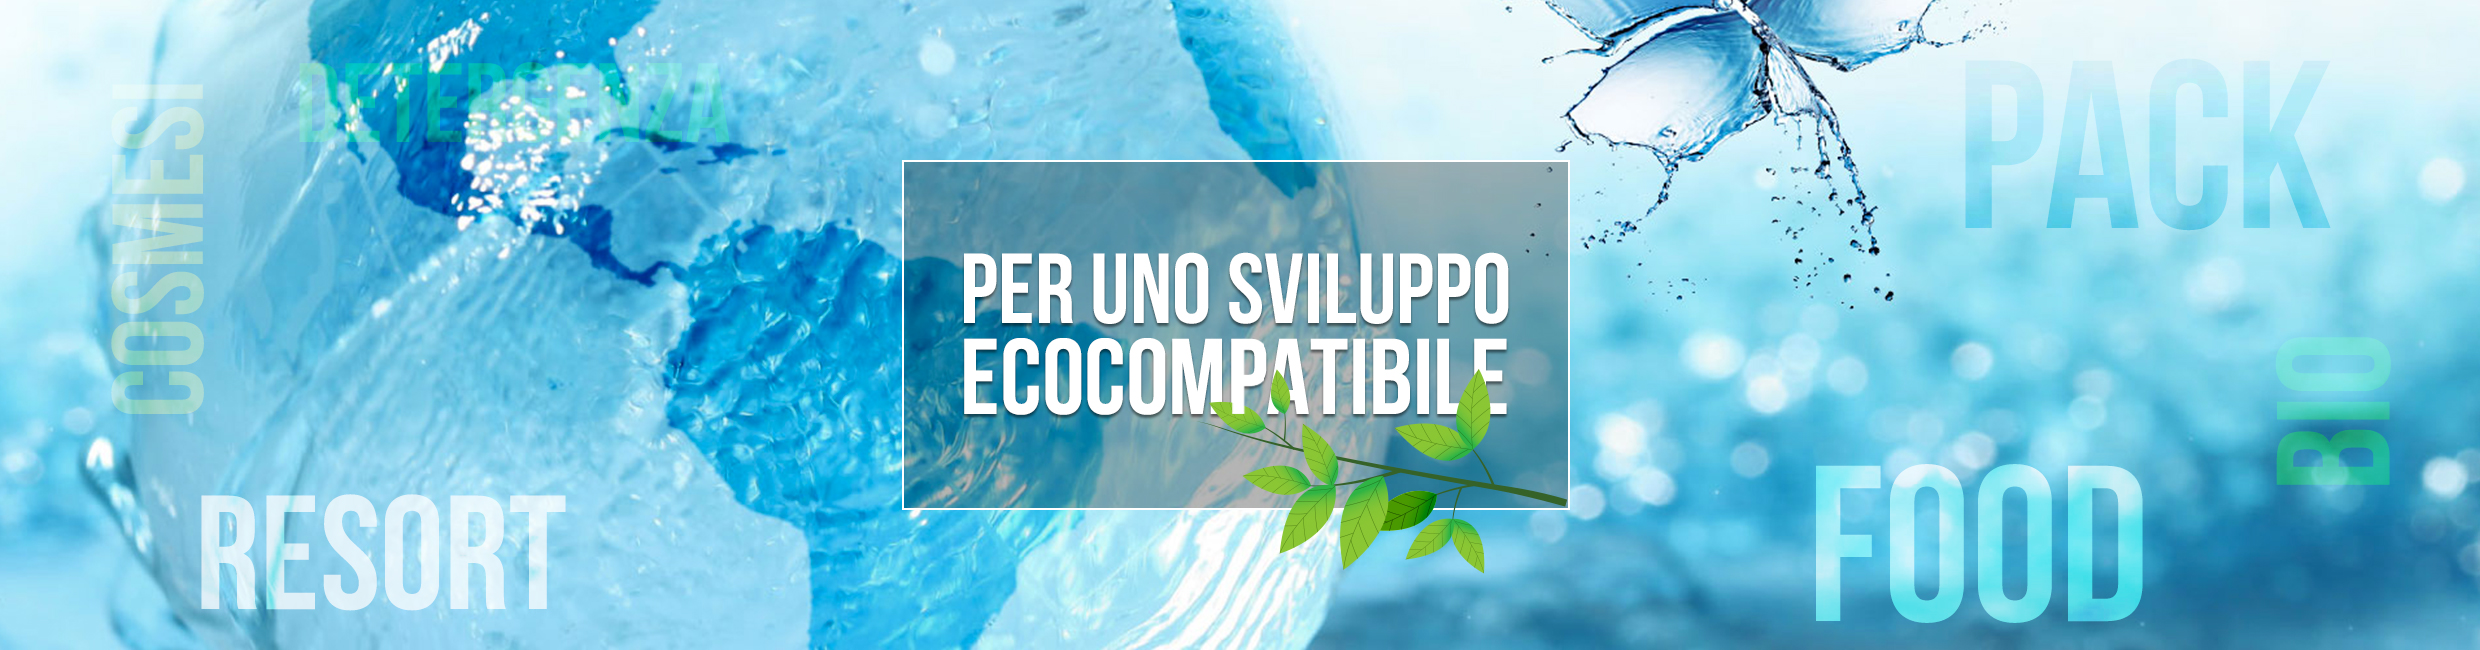 Ecogruppo Italia